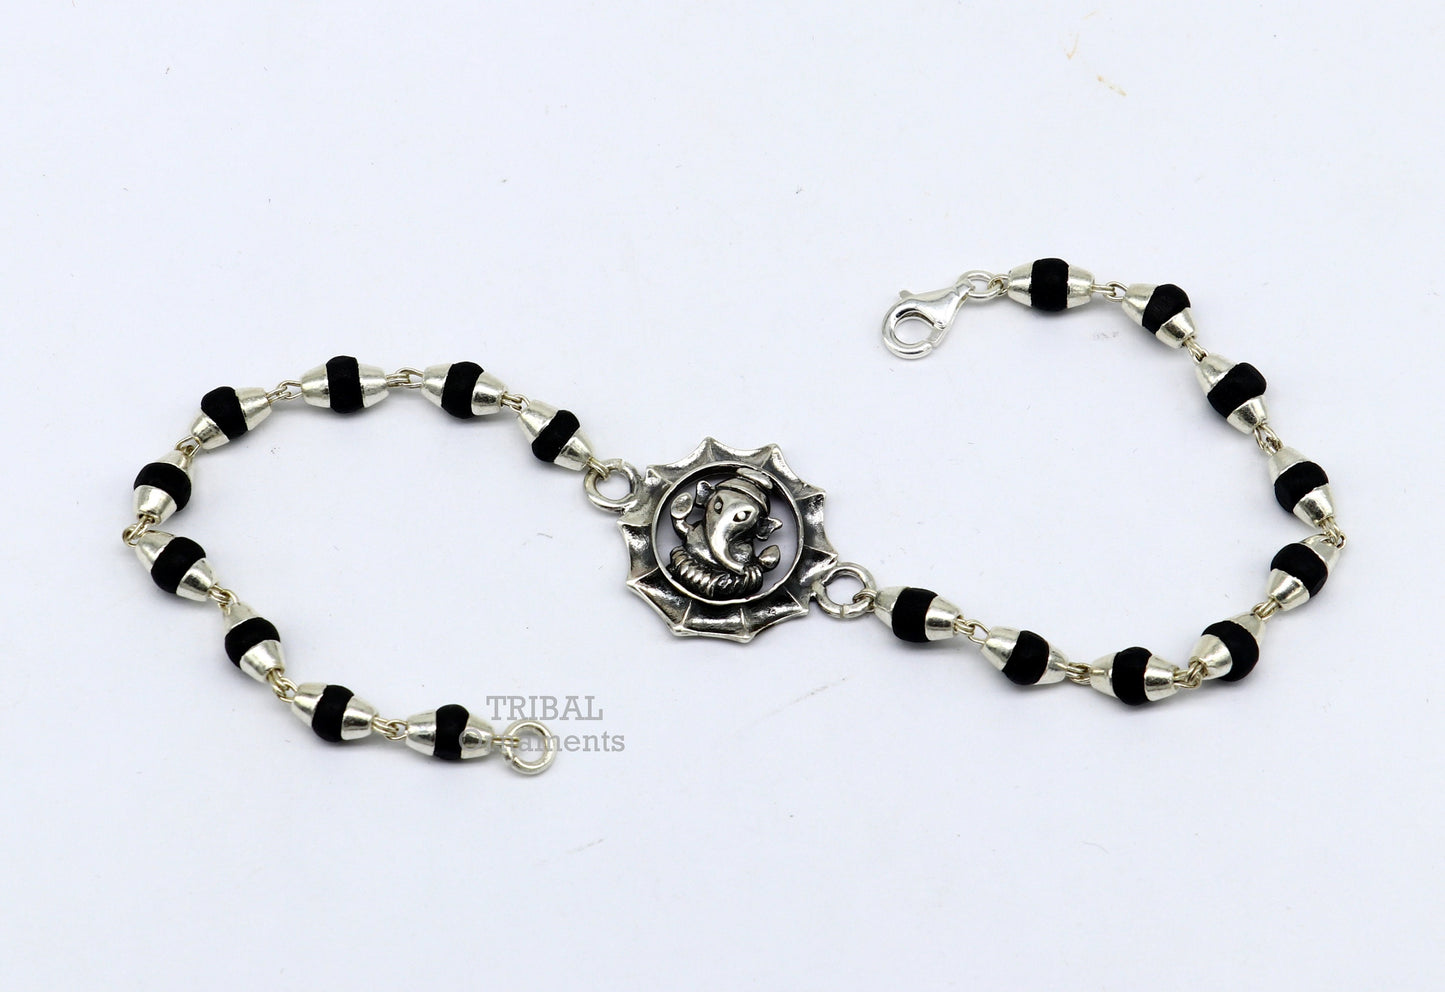 Holy basil rosary 925 sterling silver handmade lord Ganesha design Rakhi bracelet amazing brother bracelet, use as daily use jewelry rk218 - TRIBAL ORNAMENTS